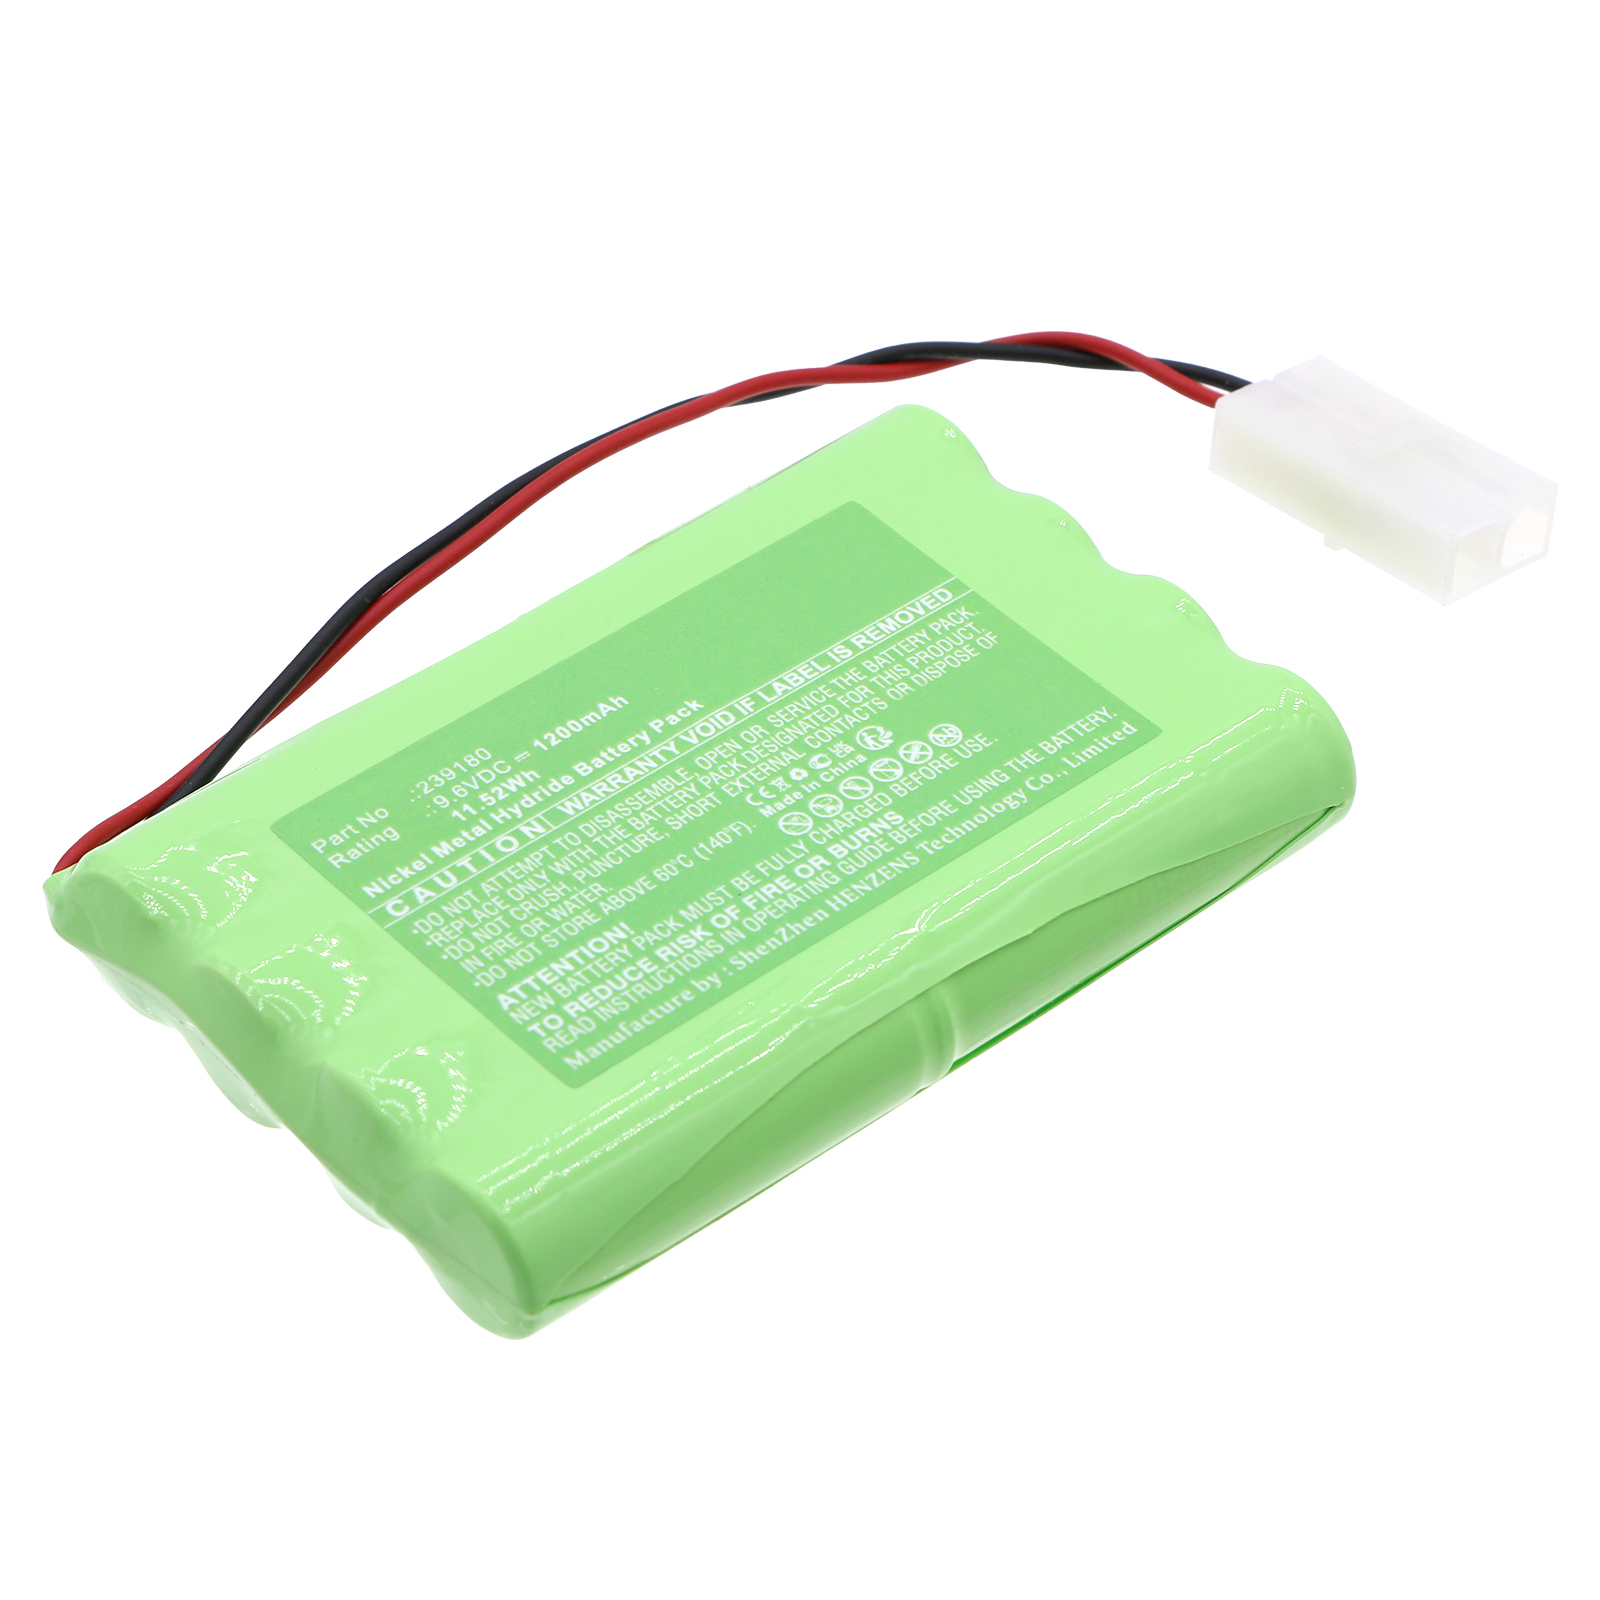 Synergy Digital Diagnostic Scanner Battery, Compatible with OTC 239180 Diagnostic Scanner Battery (Ni-MH, 9.6V, 1200mAh)